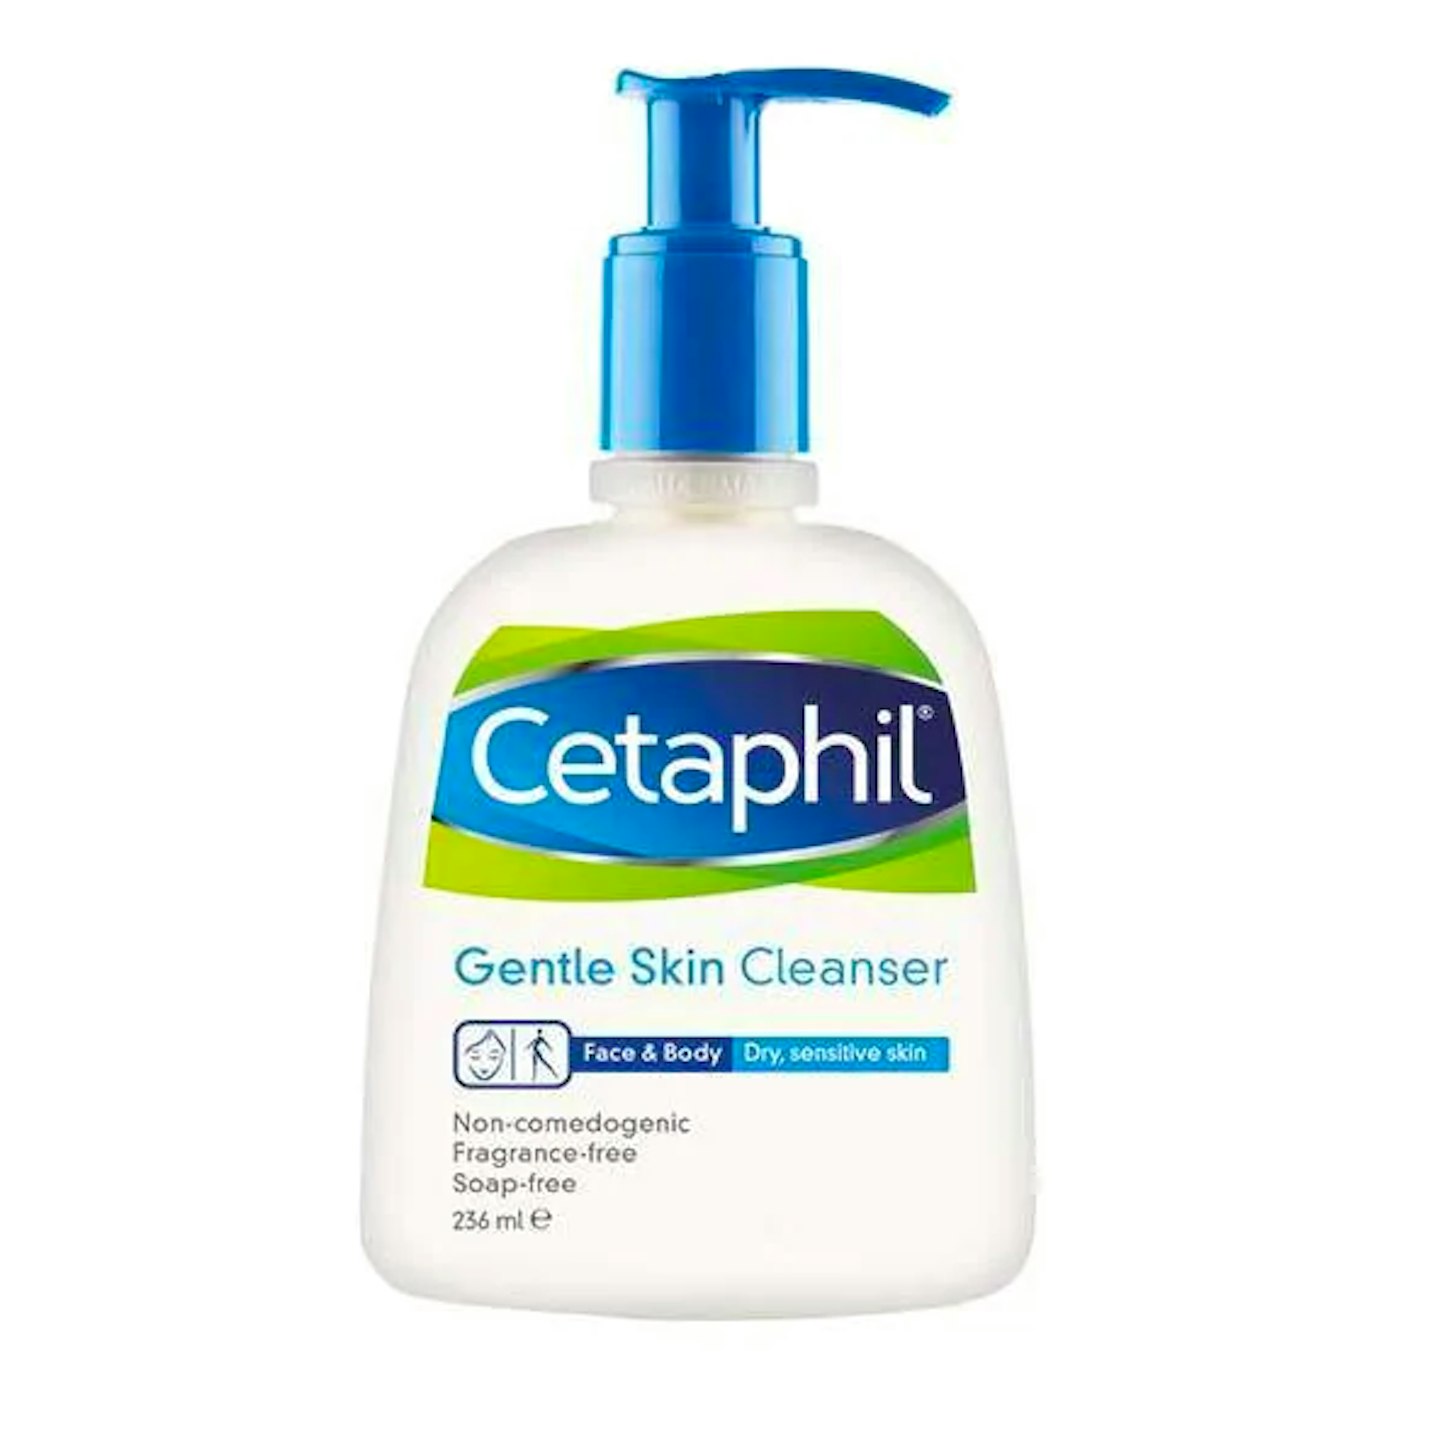 Cetaphil, Gentle Skin Cleanser, £8.99